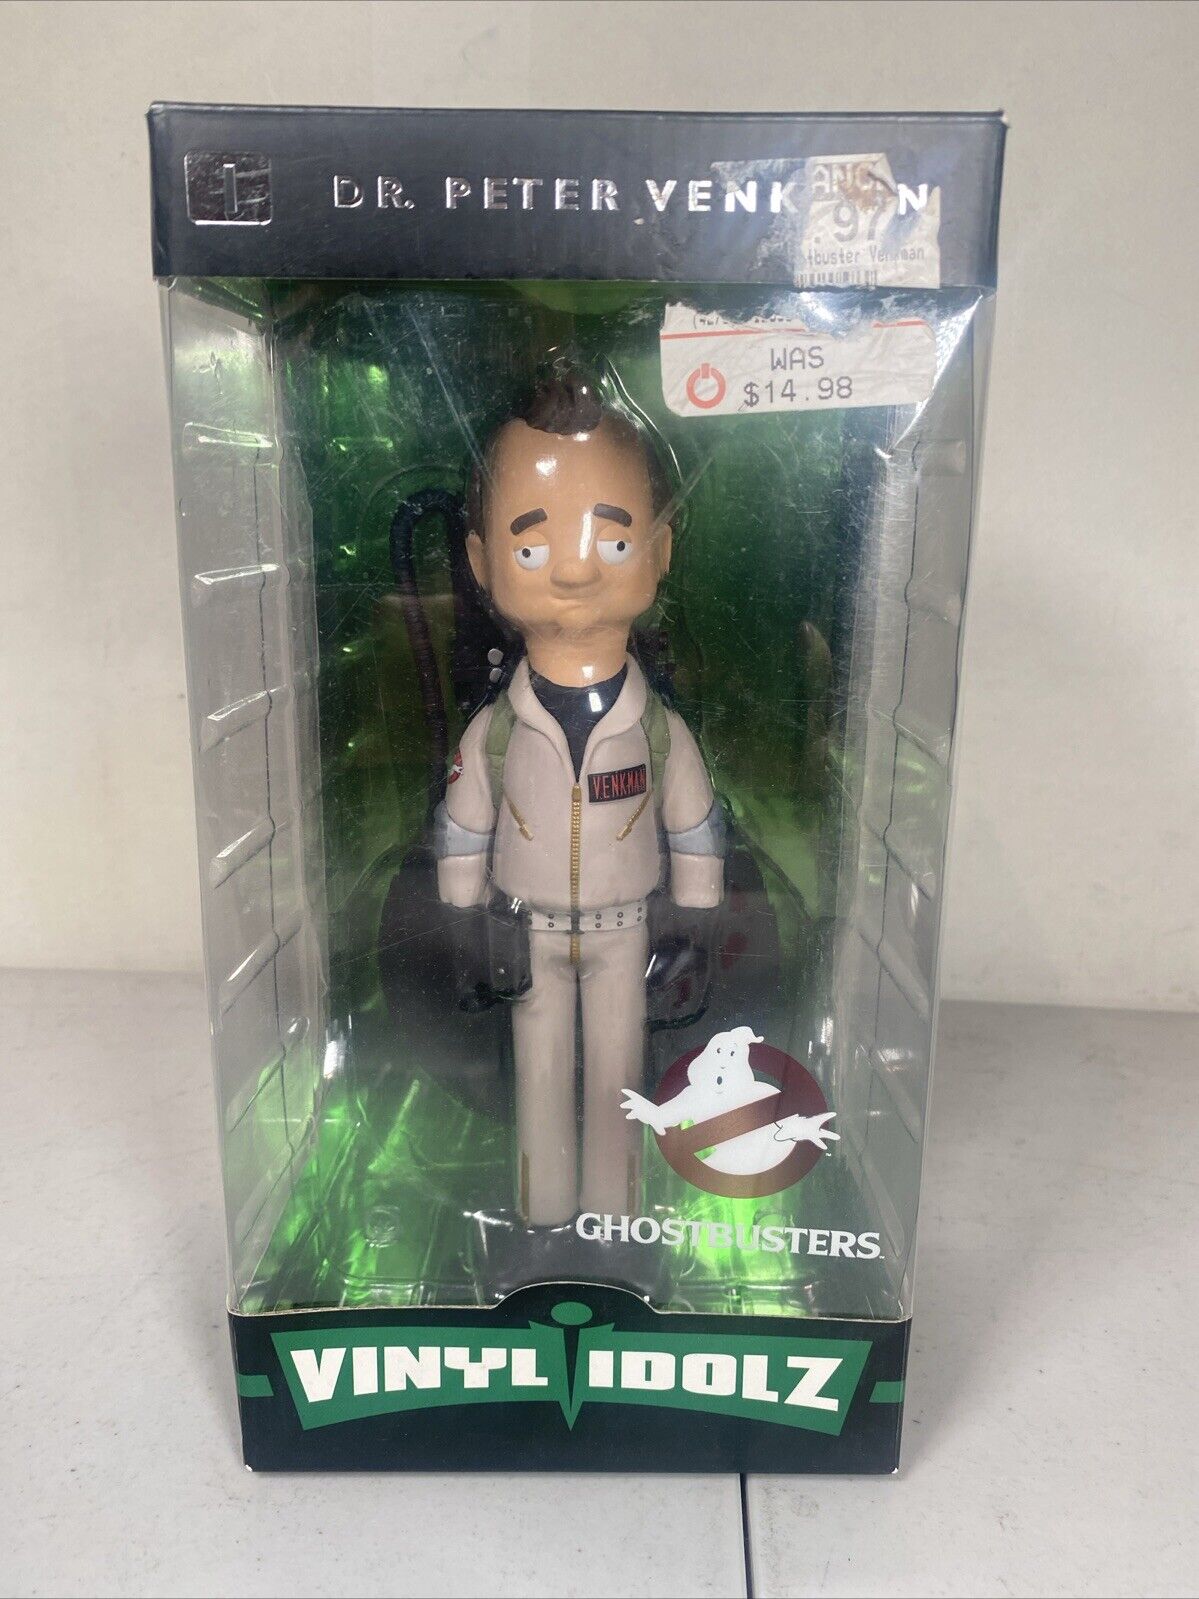 Ghostbusters-Dr. Peter Venkman Vinyl Idolz Figure in Original Box